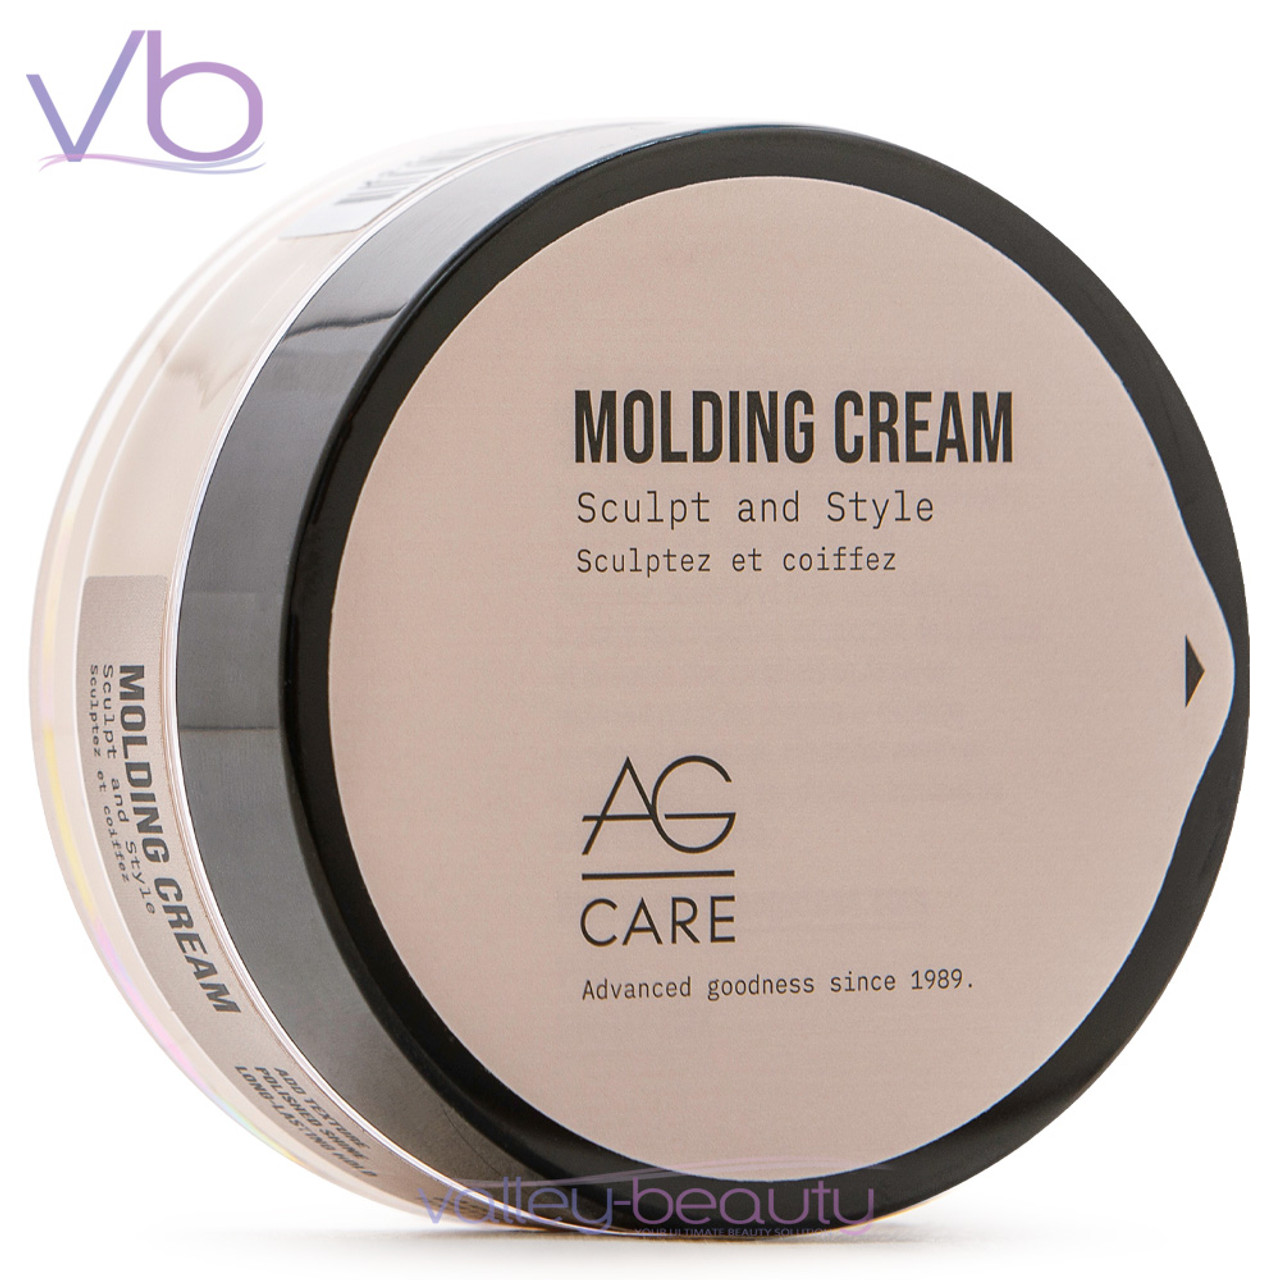 AG Care Molding Cream